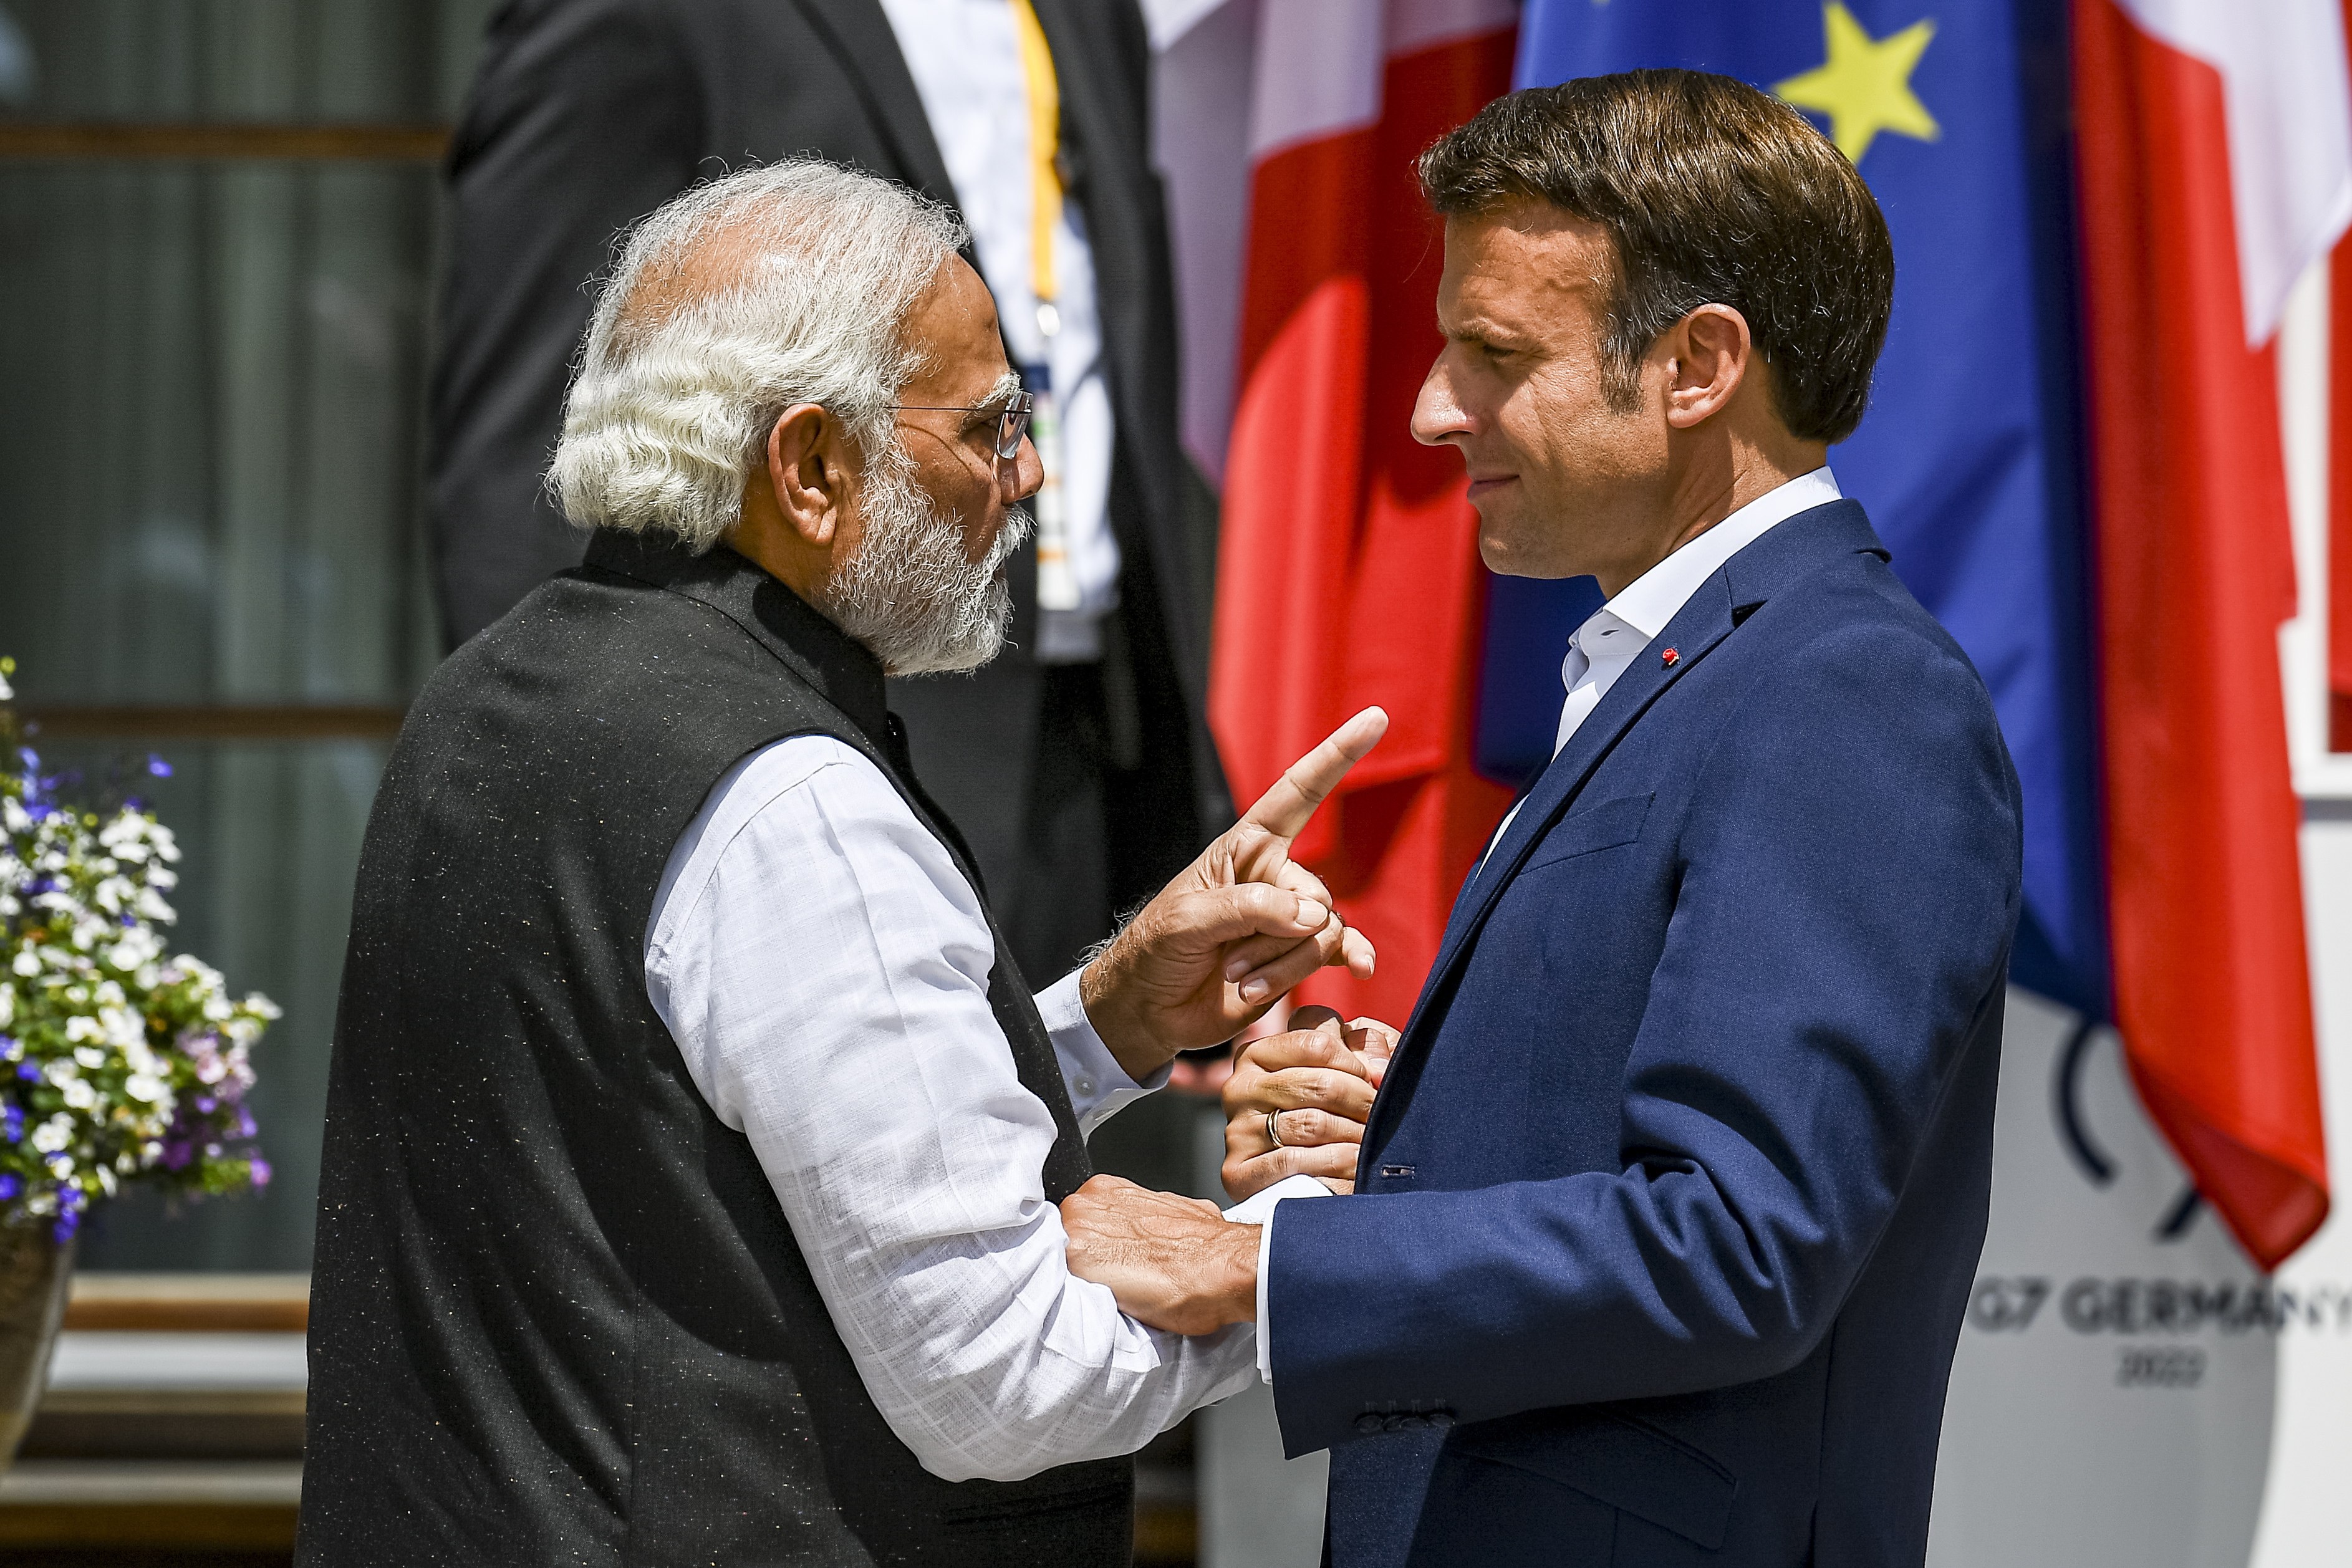 Prime Minister Narendra Modi greets France’s President Emmanuel Macron at the G7 summit in Germany. Photo: EPA-EFE
